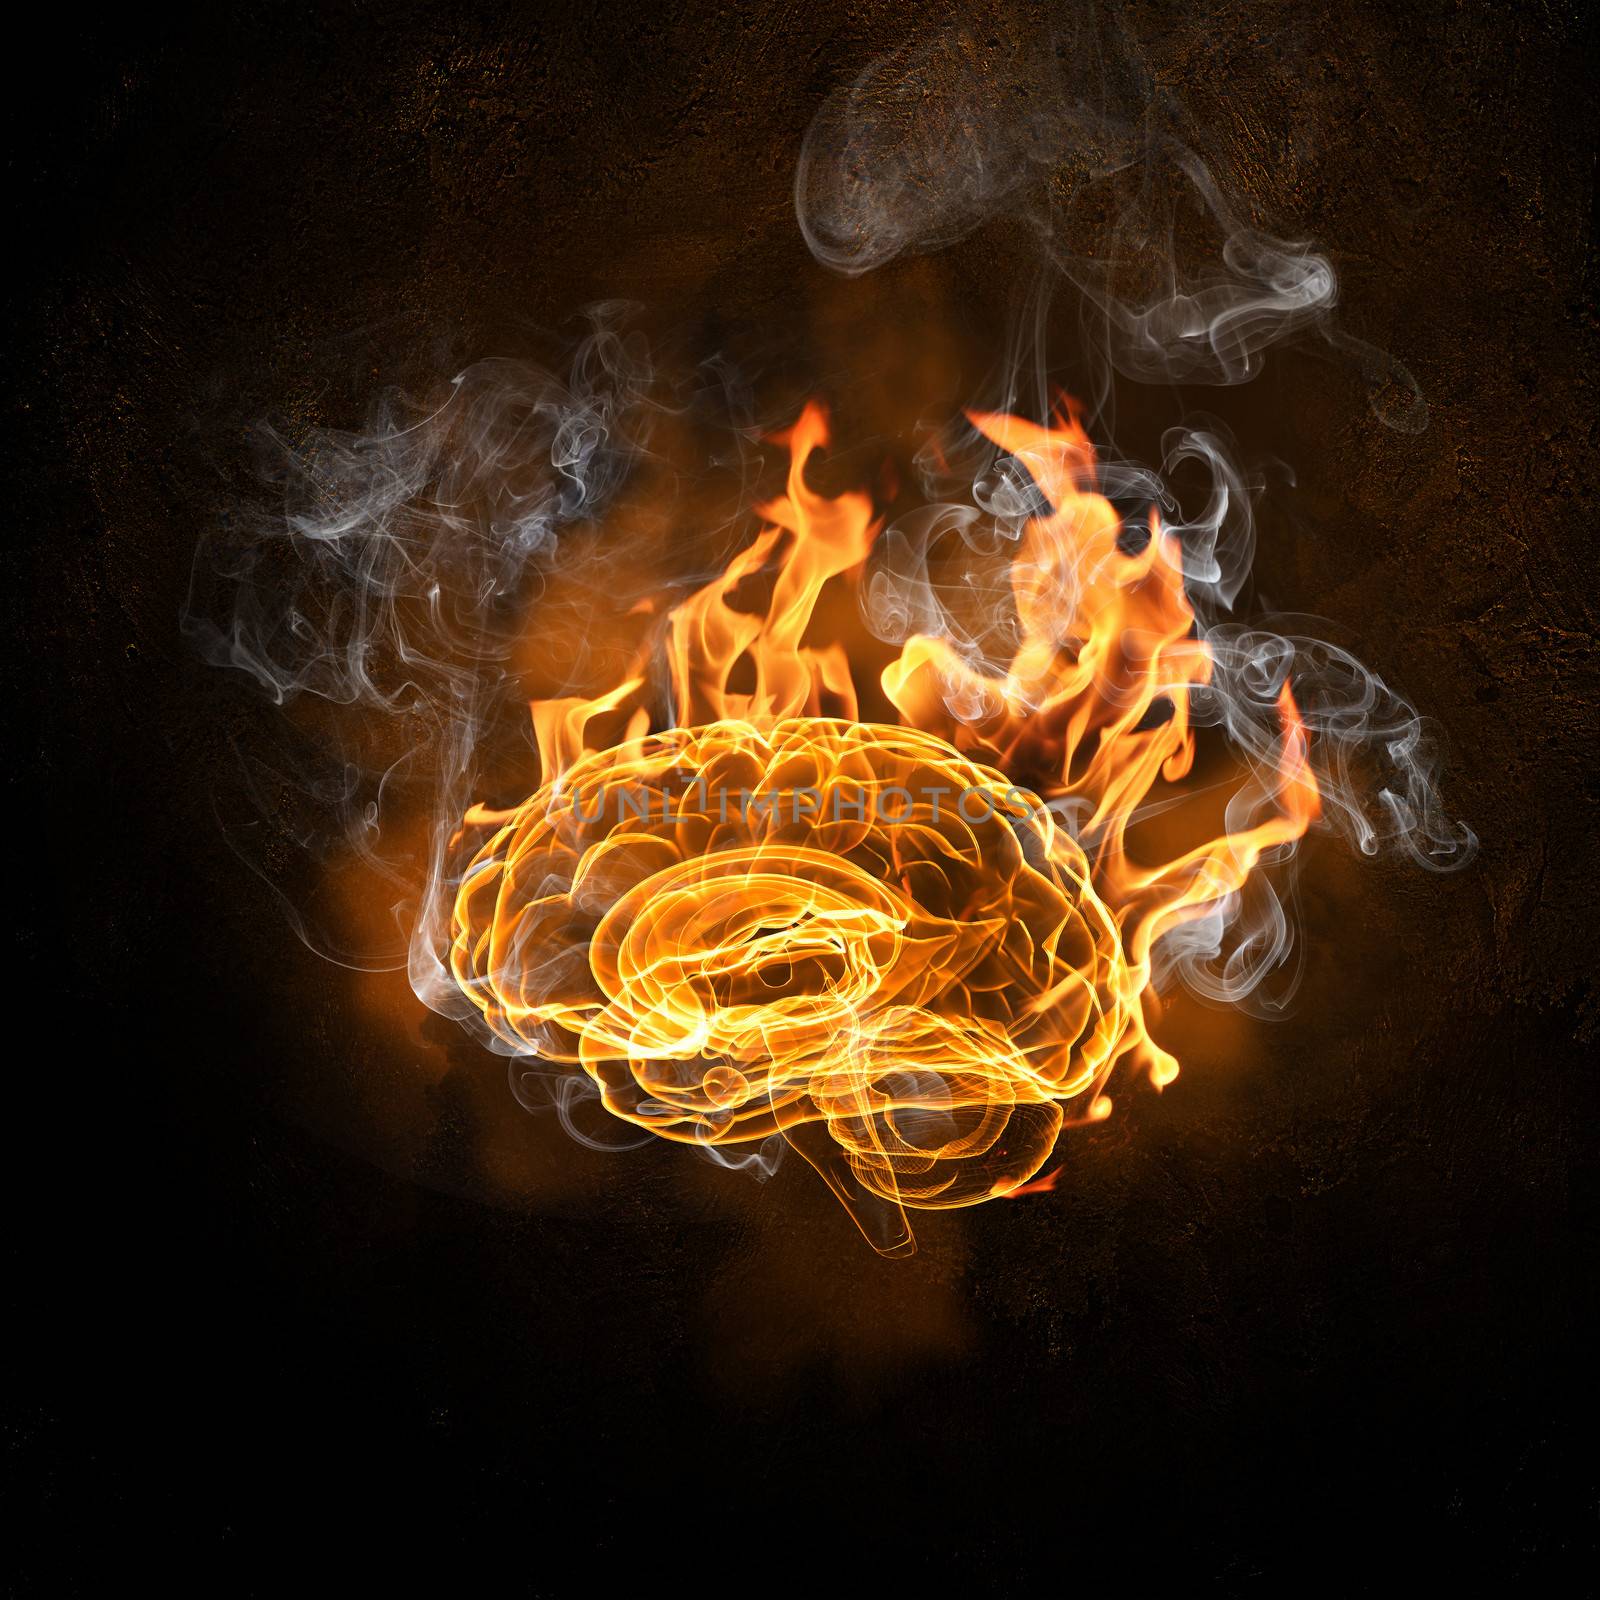 Human brain in fire by sergey_nivens